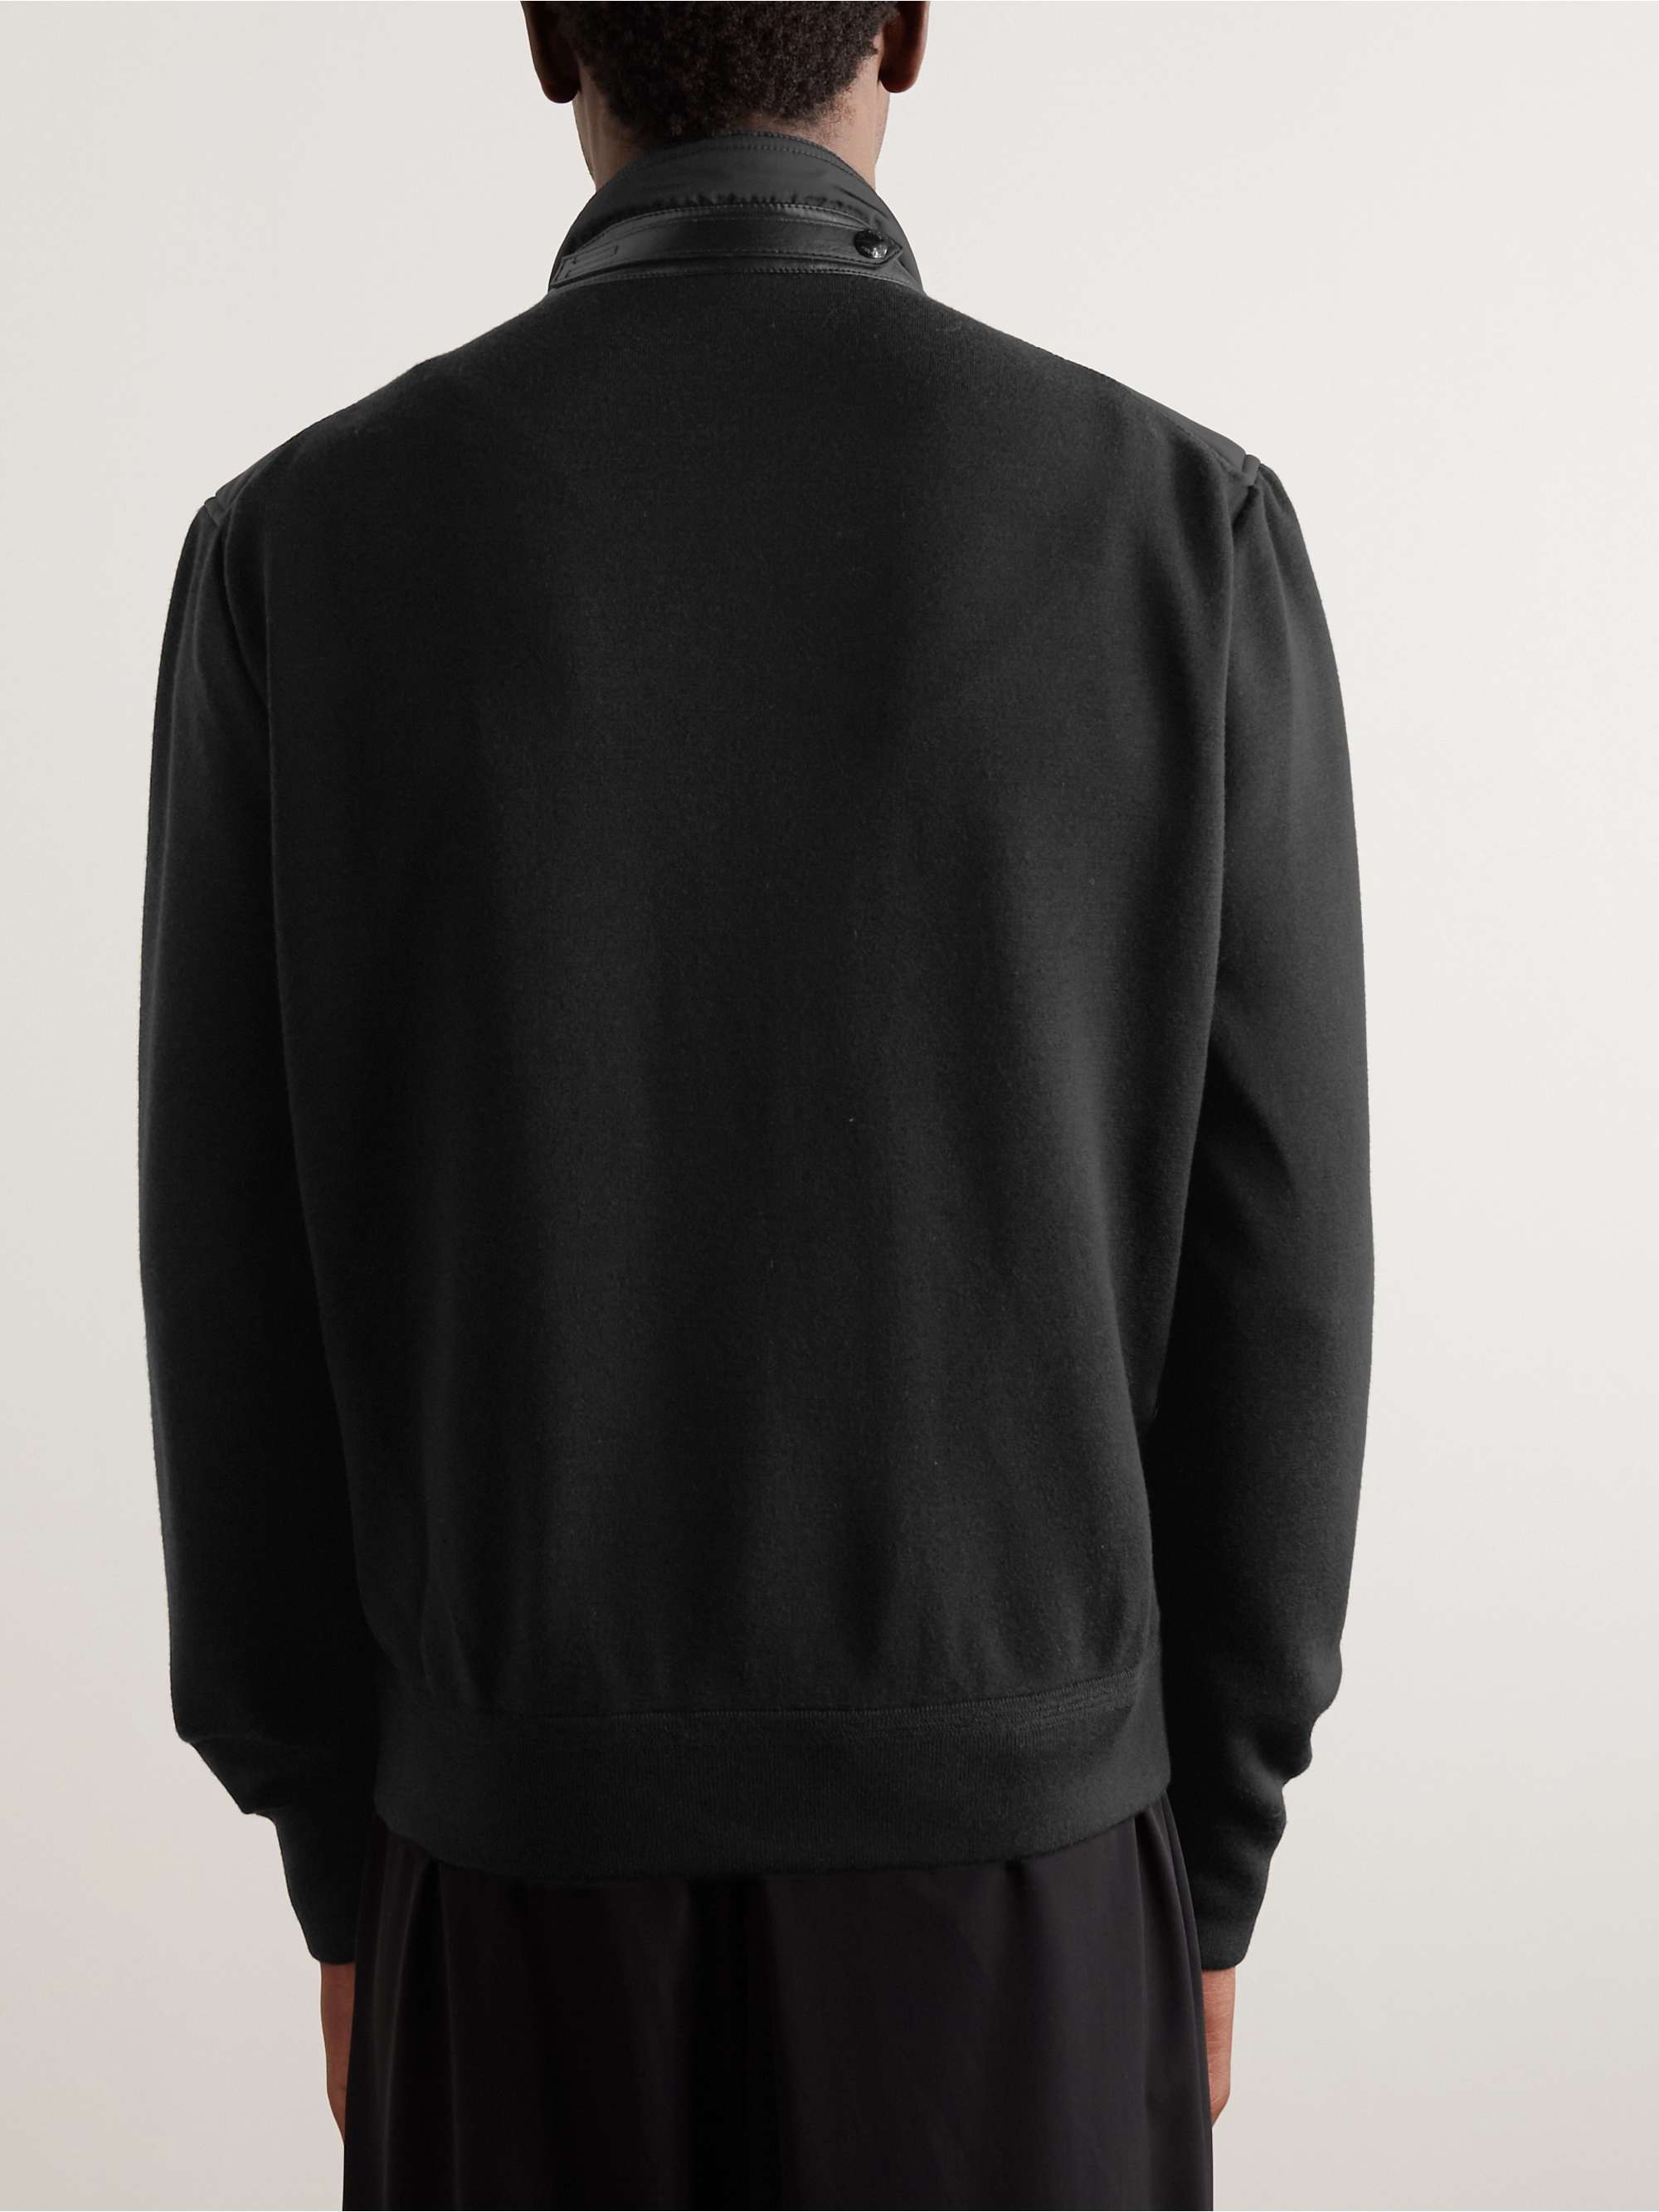 TOM FORD Leather-Trimmed Nylon and Merino Wool Harrington Jacket | MR ...